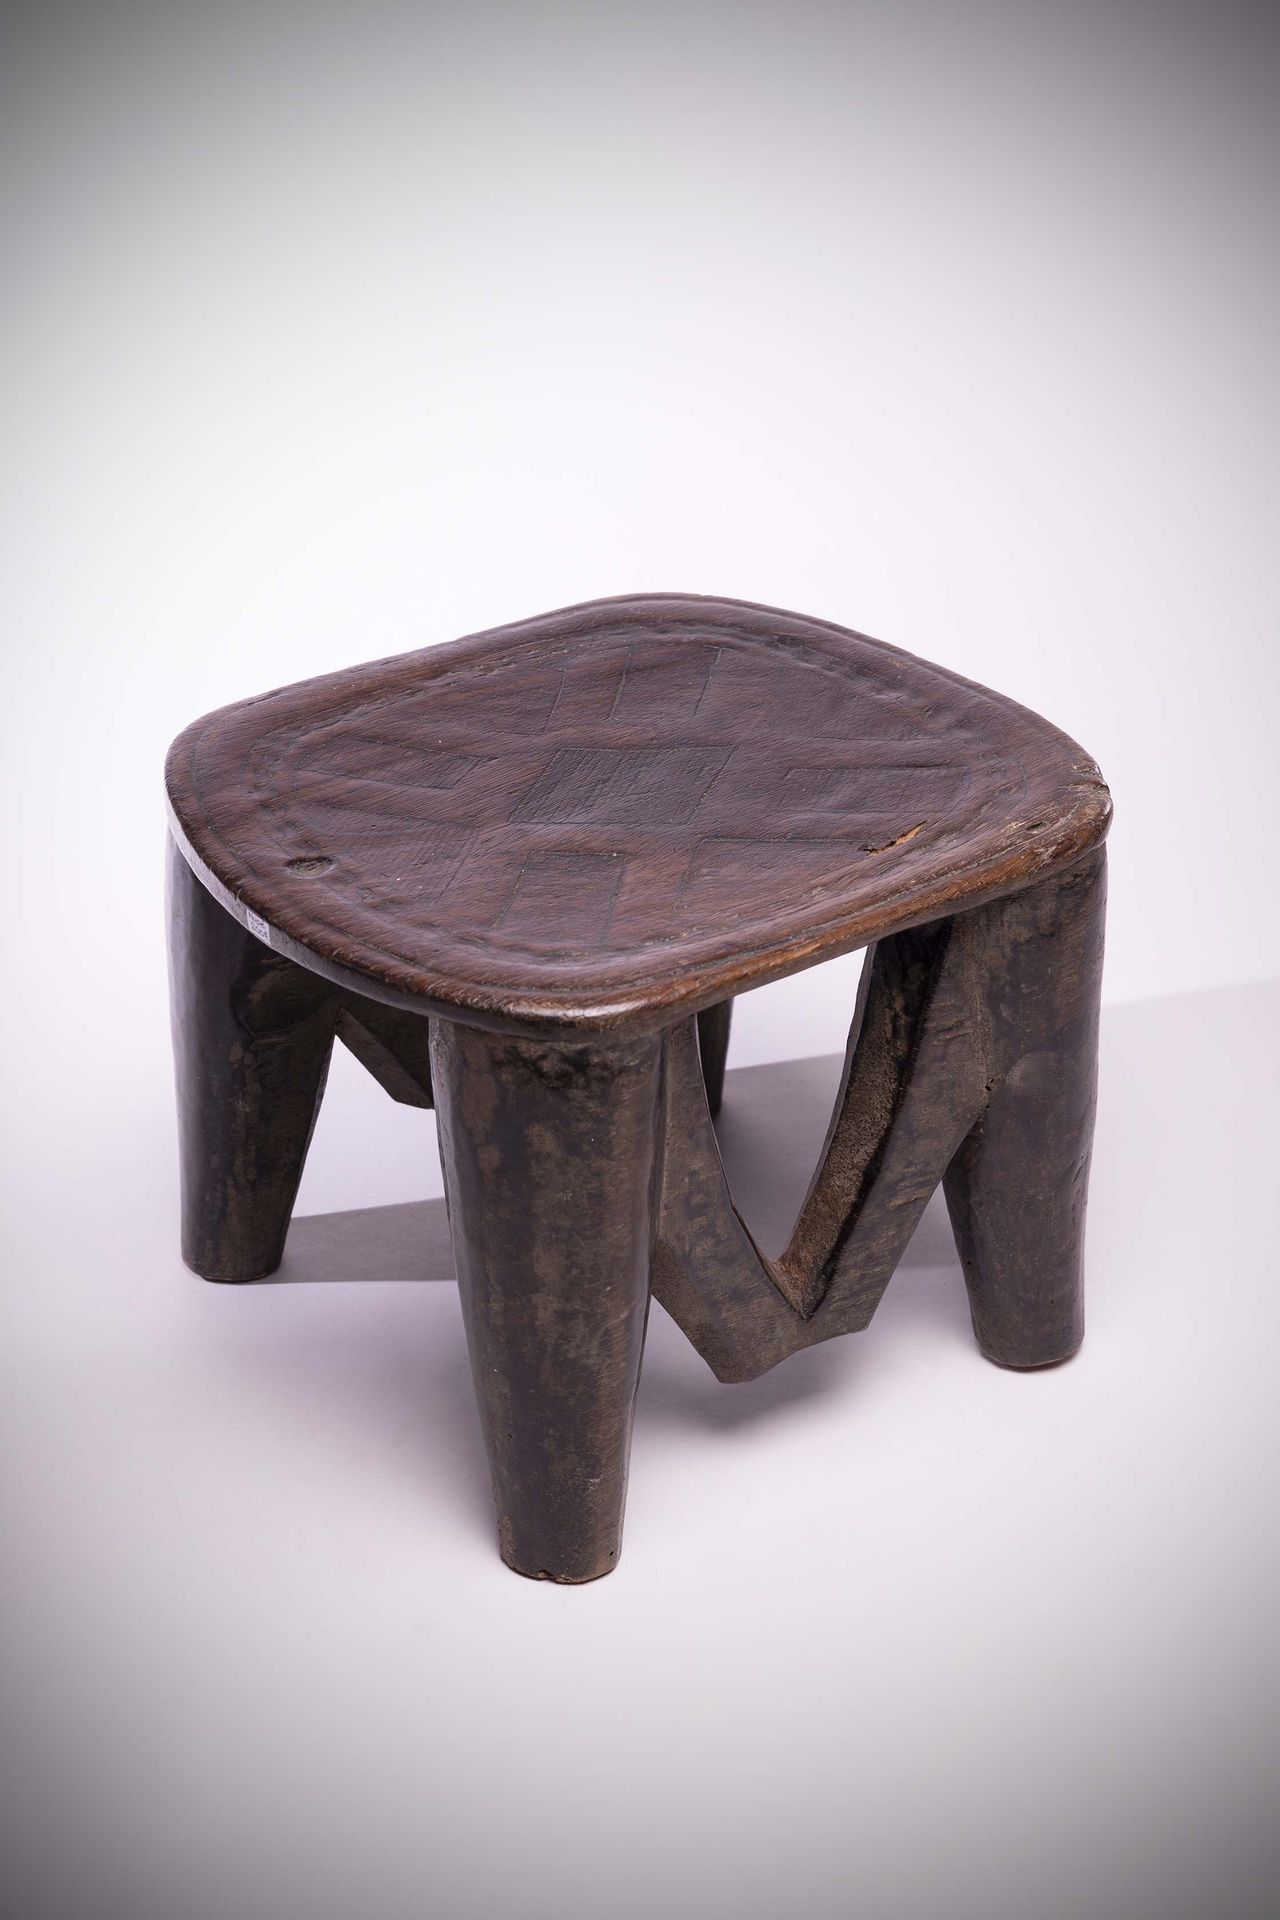 Null Nupé

(尼日利亚)重拍木制单层座椅，由四条腿支撑，以拱门连接。

顶部刻有几何图案。高：20厘米